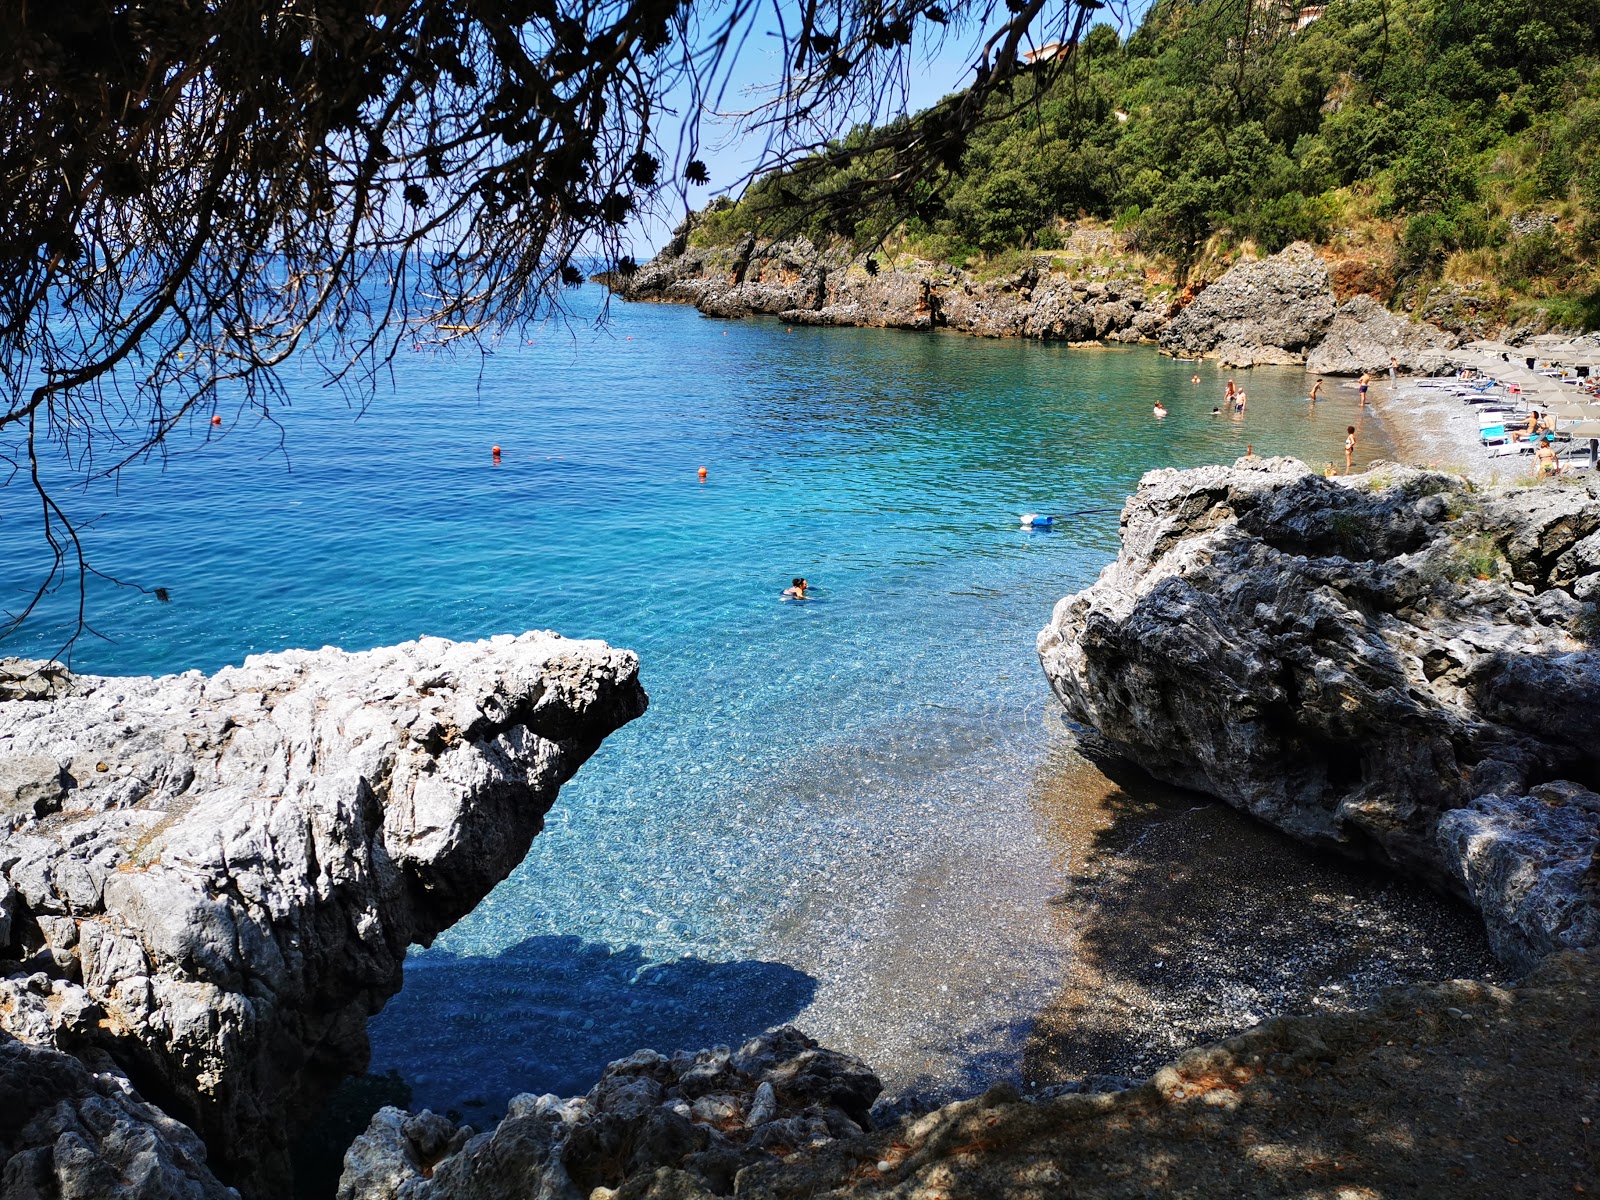 Spiaggia Portacquafridda的照片 带有灰色细卵石表面